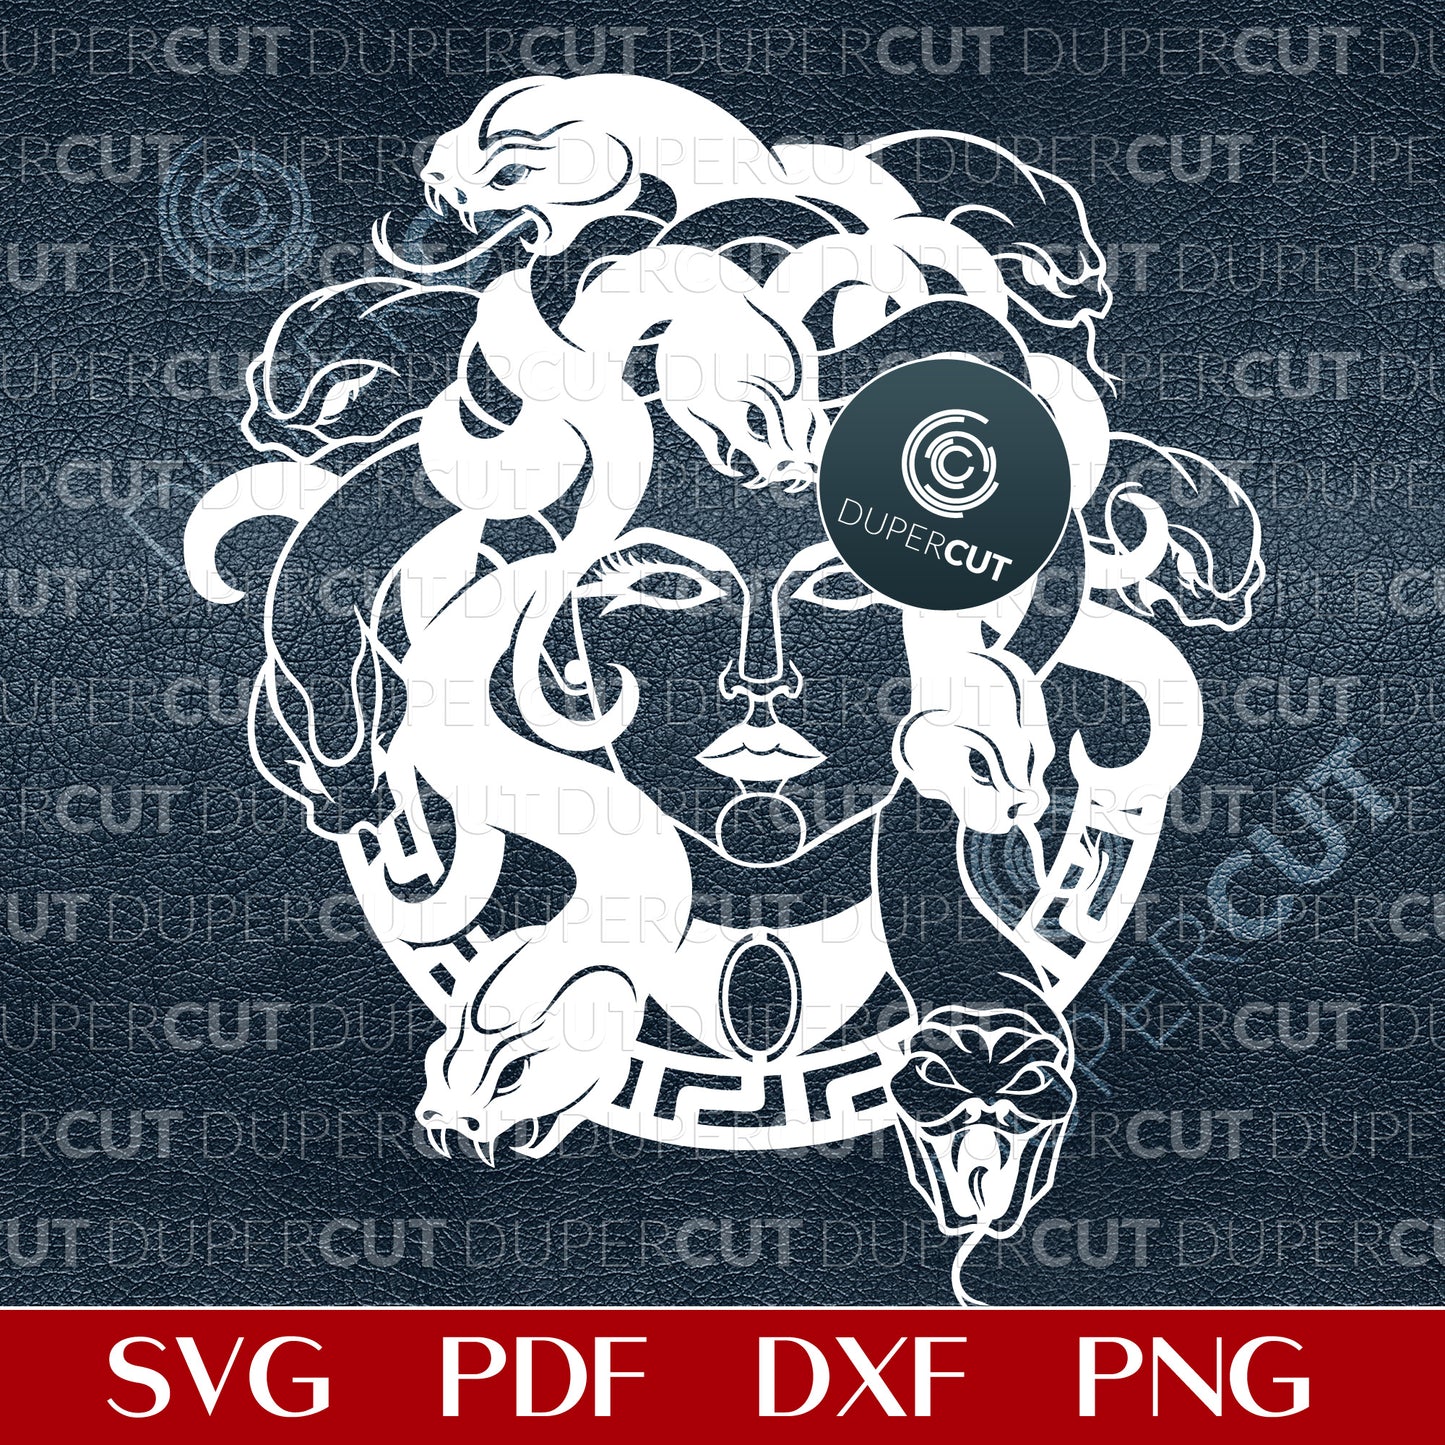 Medusa Gorgon by DuperCut - tattoo style gothic design SVG PDF PNG vector cutting files for Glowforge, Cricut, Silhouette Cameo, CNC Plasma laser machines